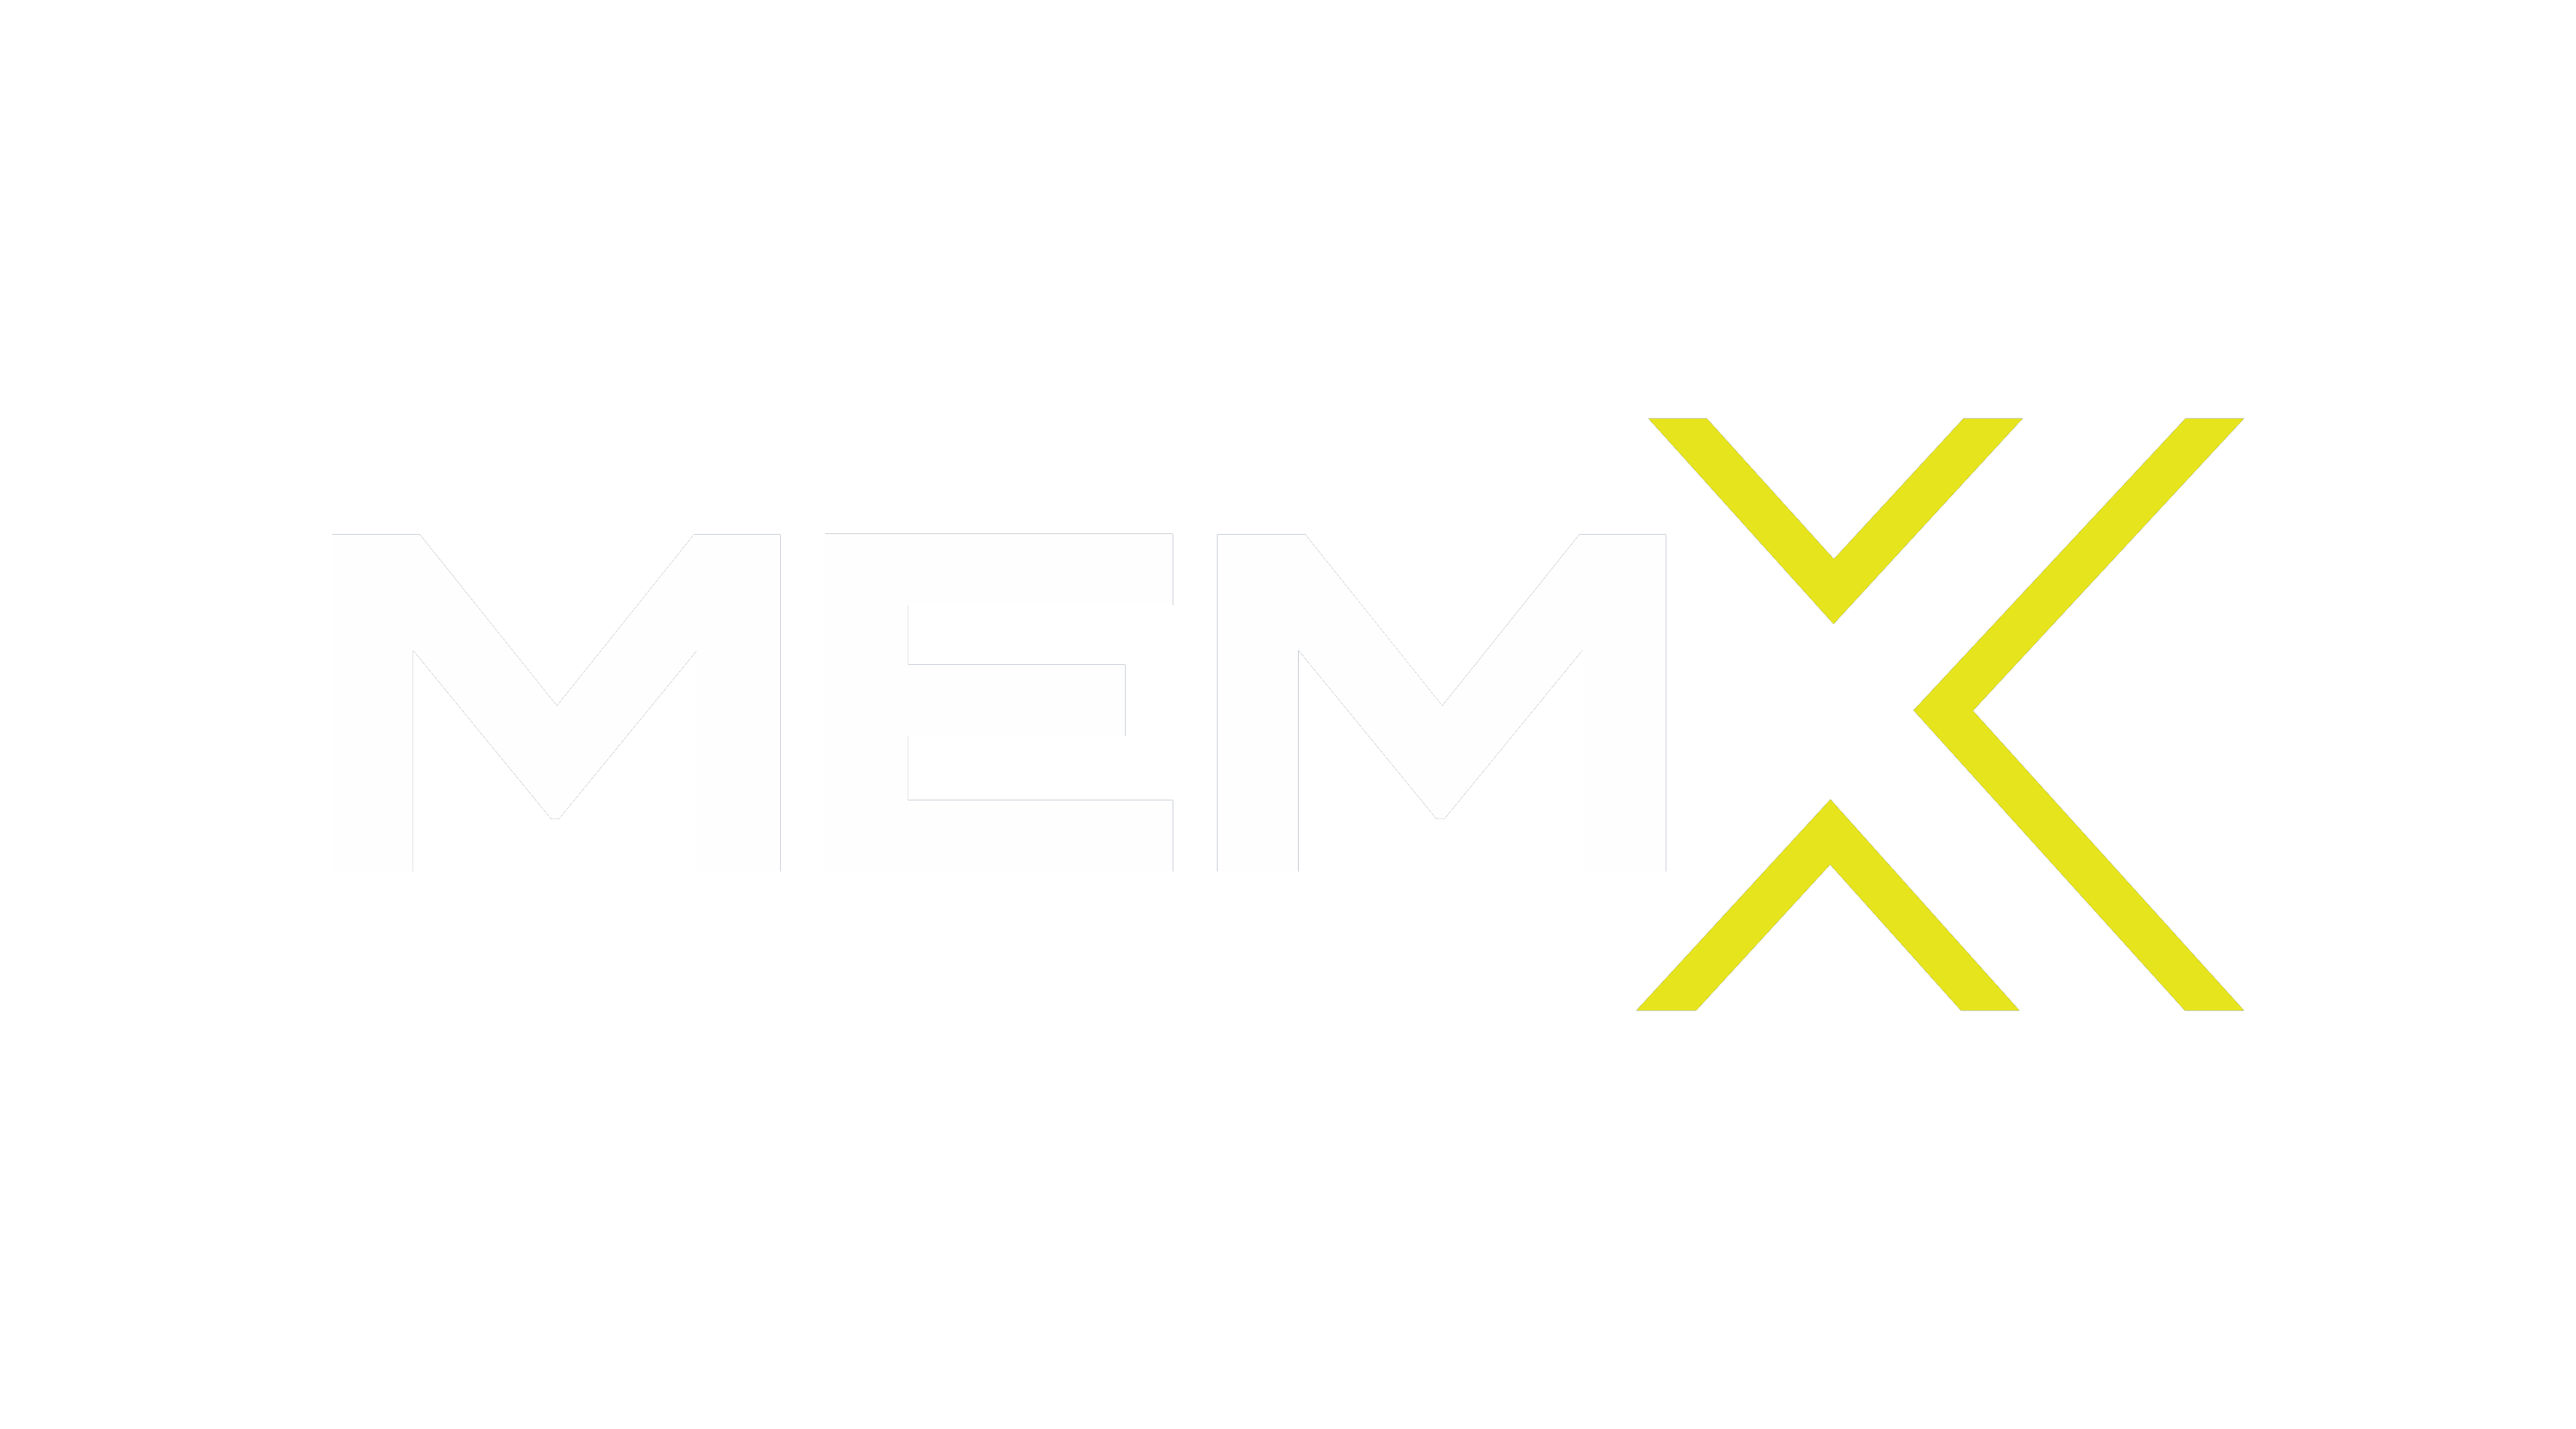 MEMX